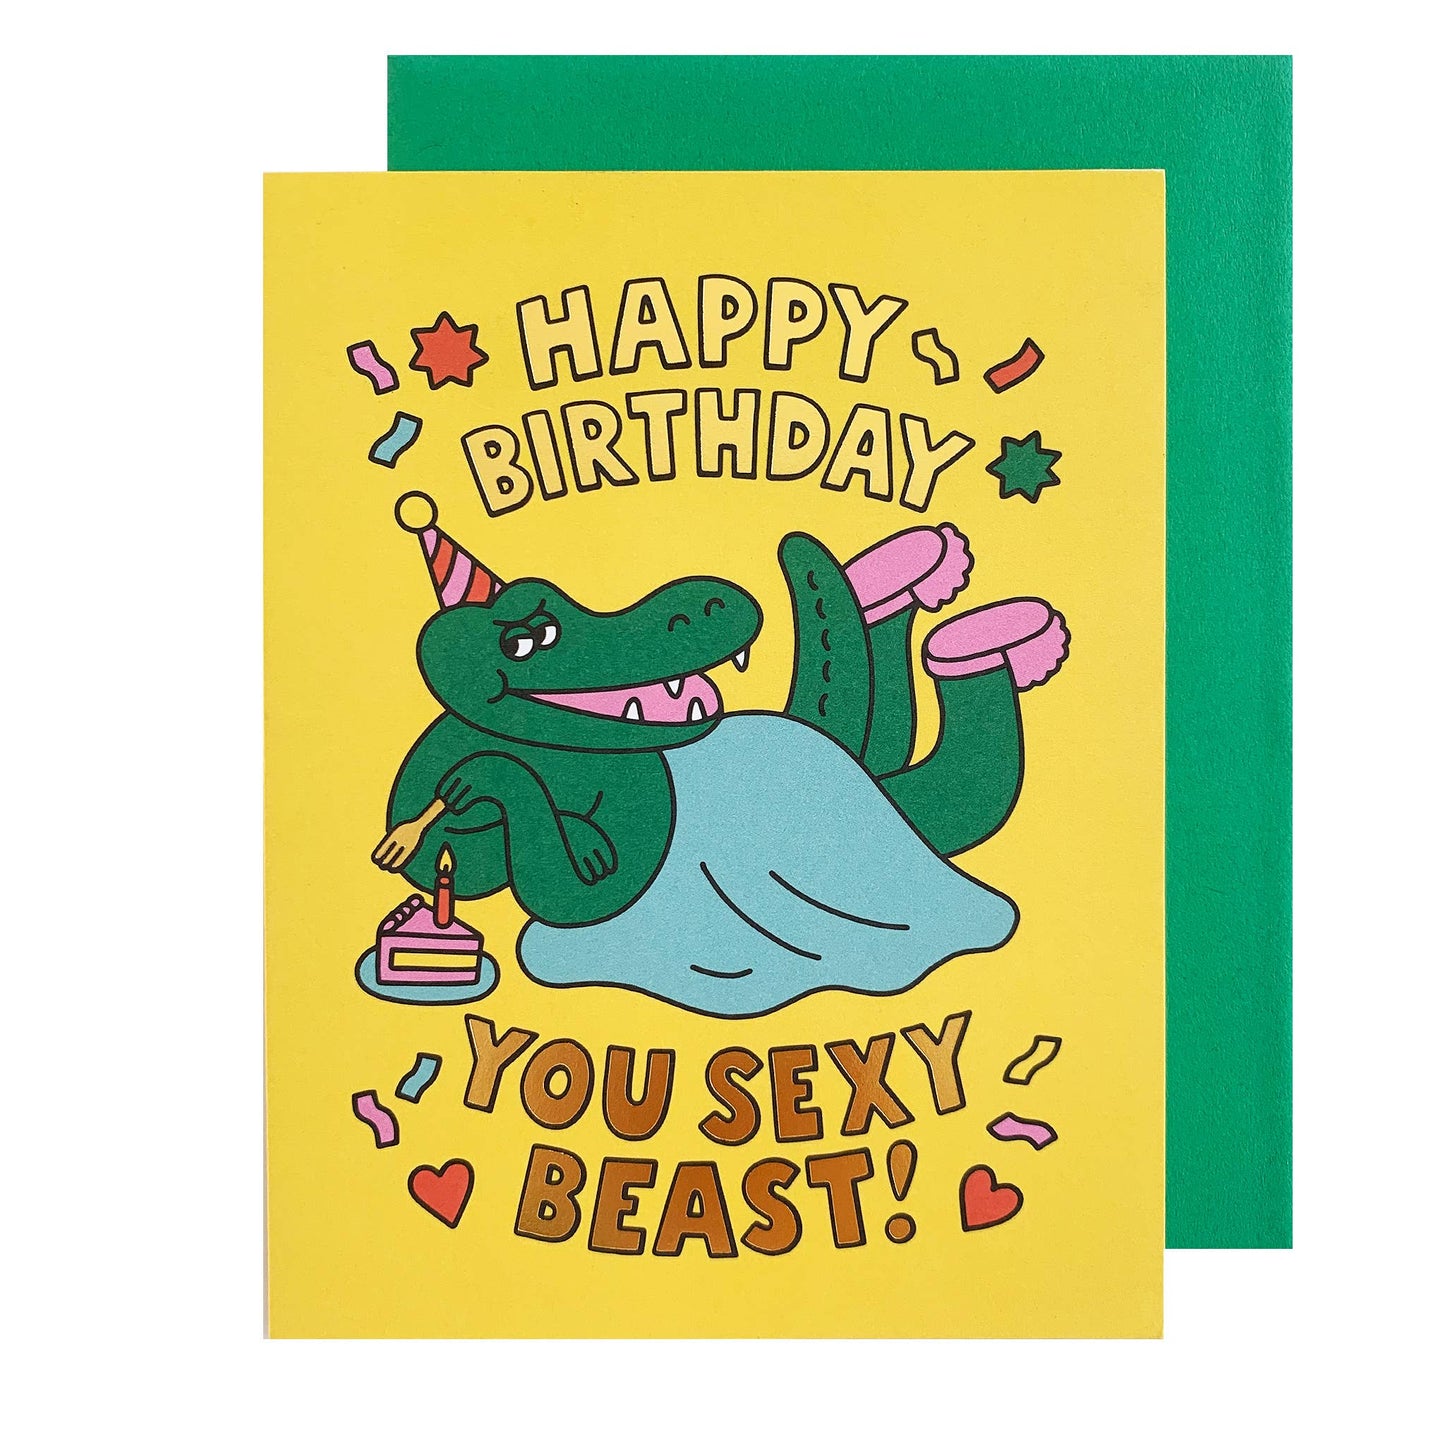 Sexy Beast Birthday Card